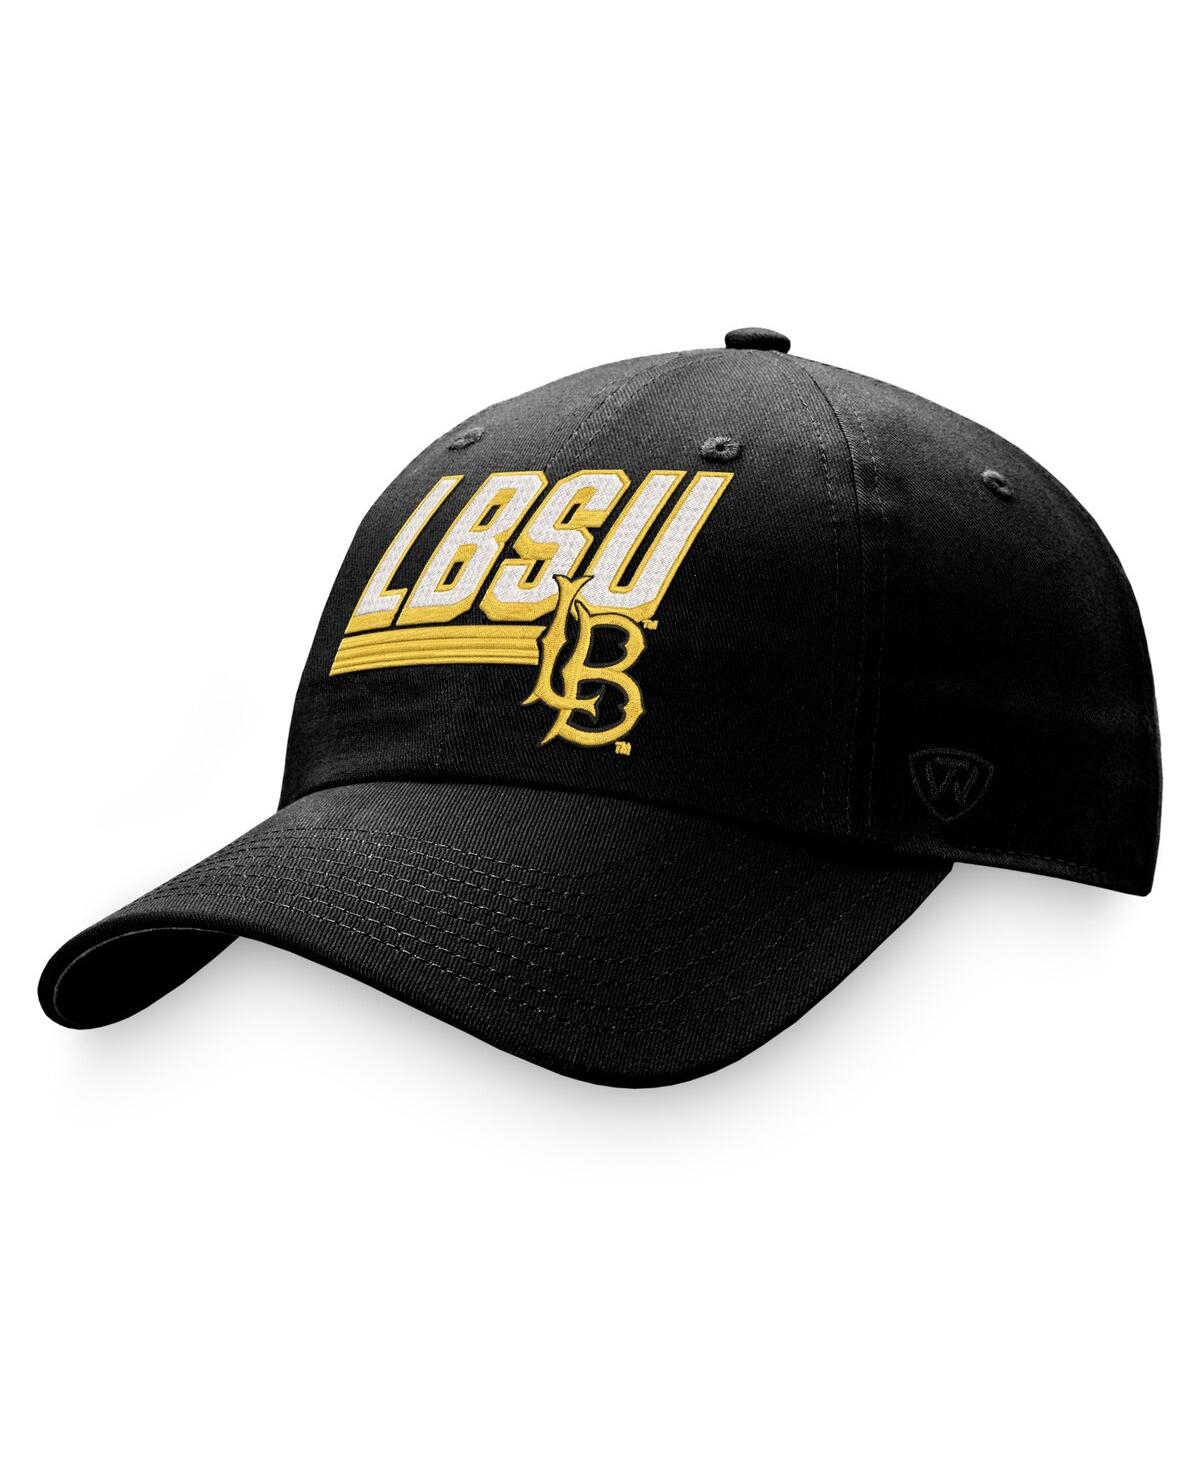 Shop Top Of The World Men's  Black Long Beach State 49ers Slice Adjustable Hat